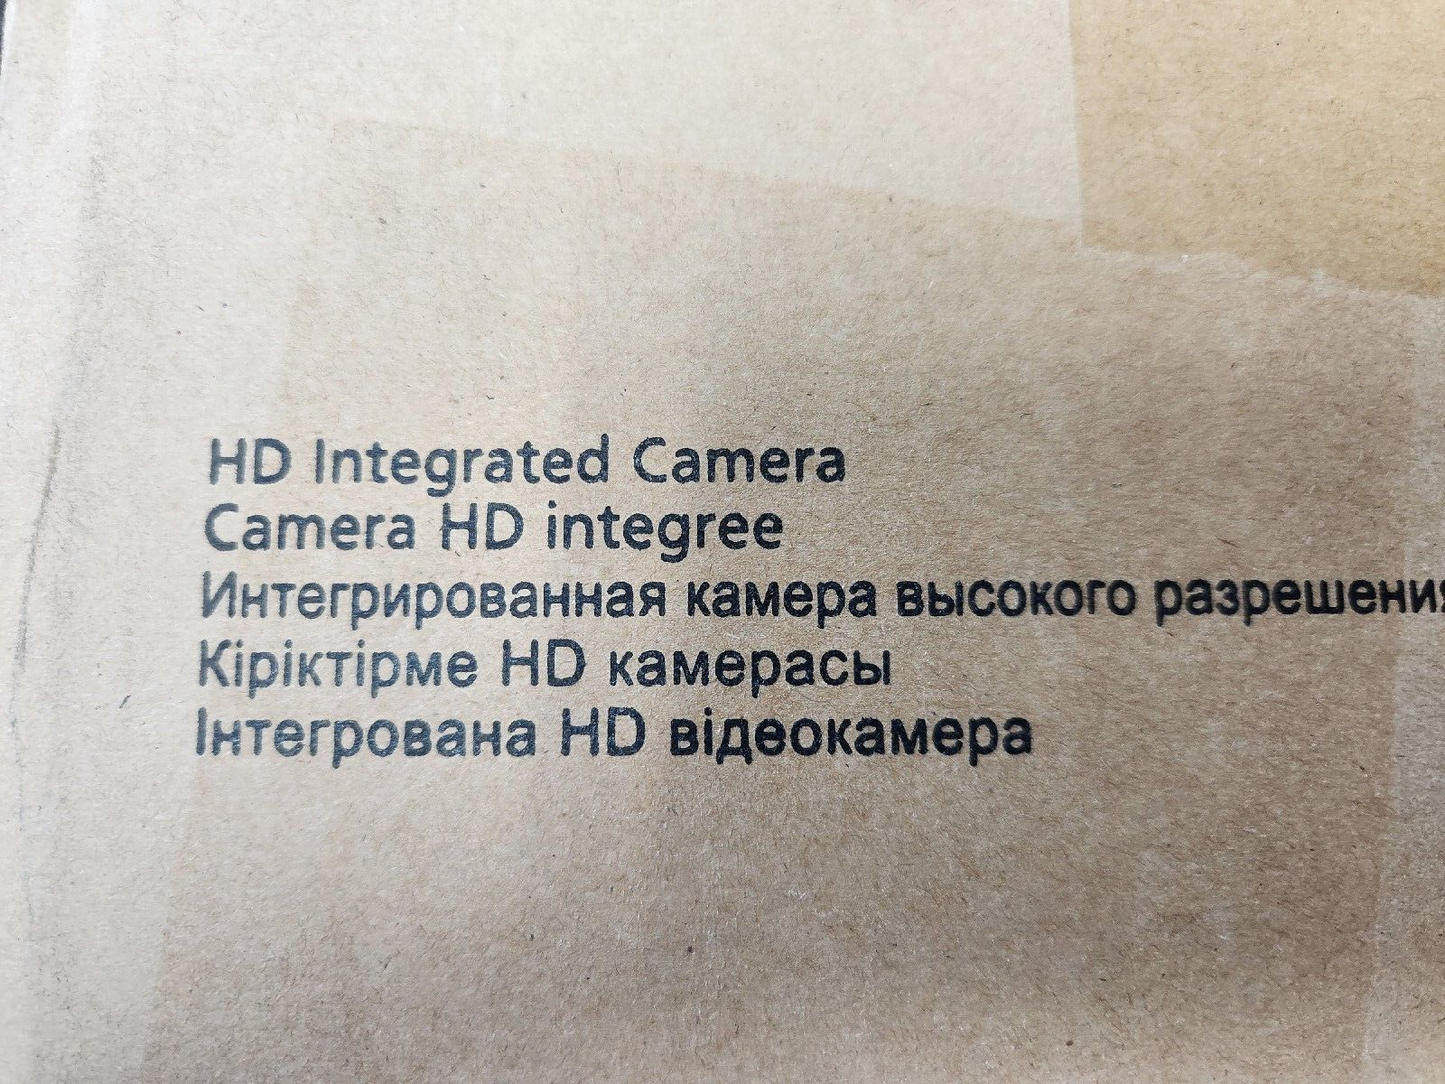 Panasonic AW-HE40HK PTZ Camera with HD-SDI Output Black AW-HE40HKPJ9 Sealed Box